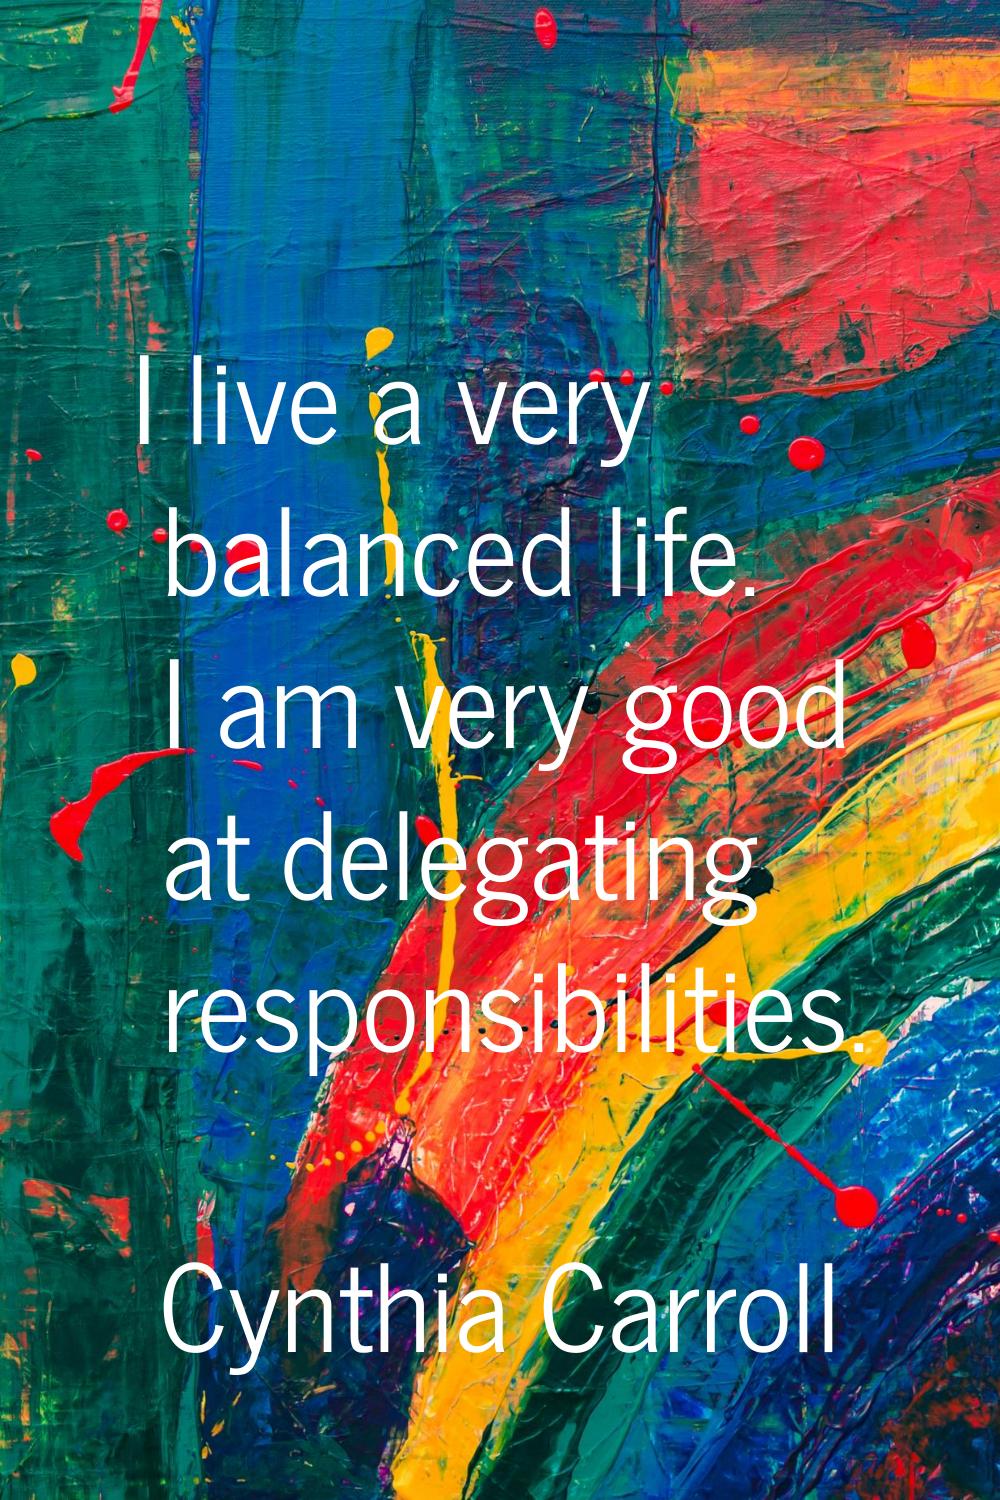 I live a very balanced life. I am very good at delegating responsibilities.